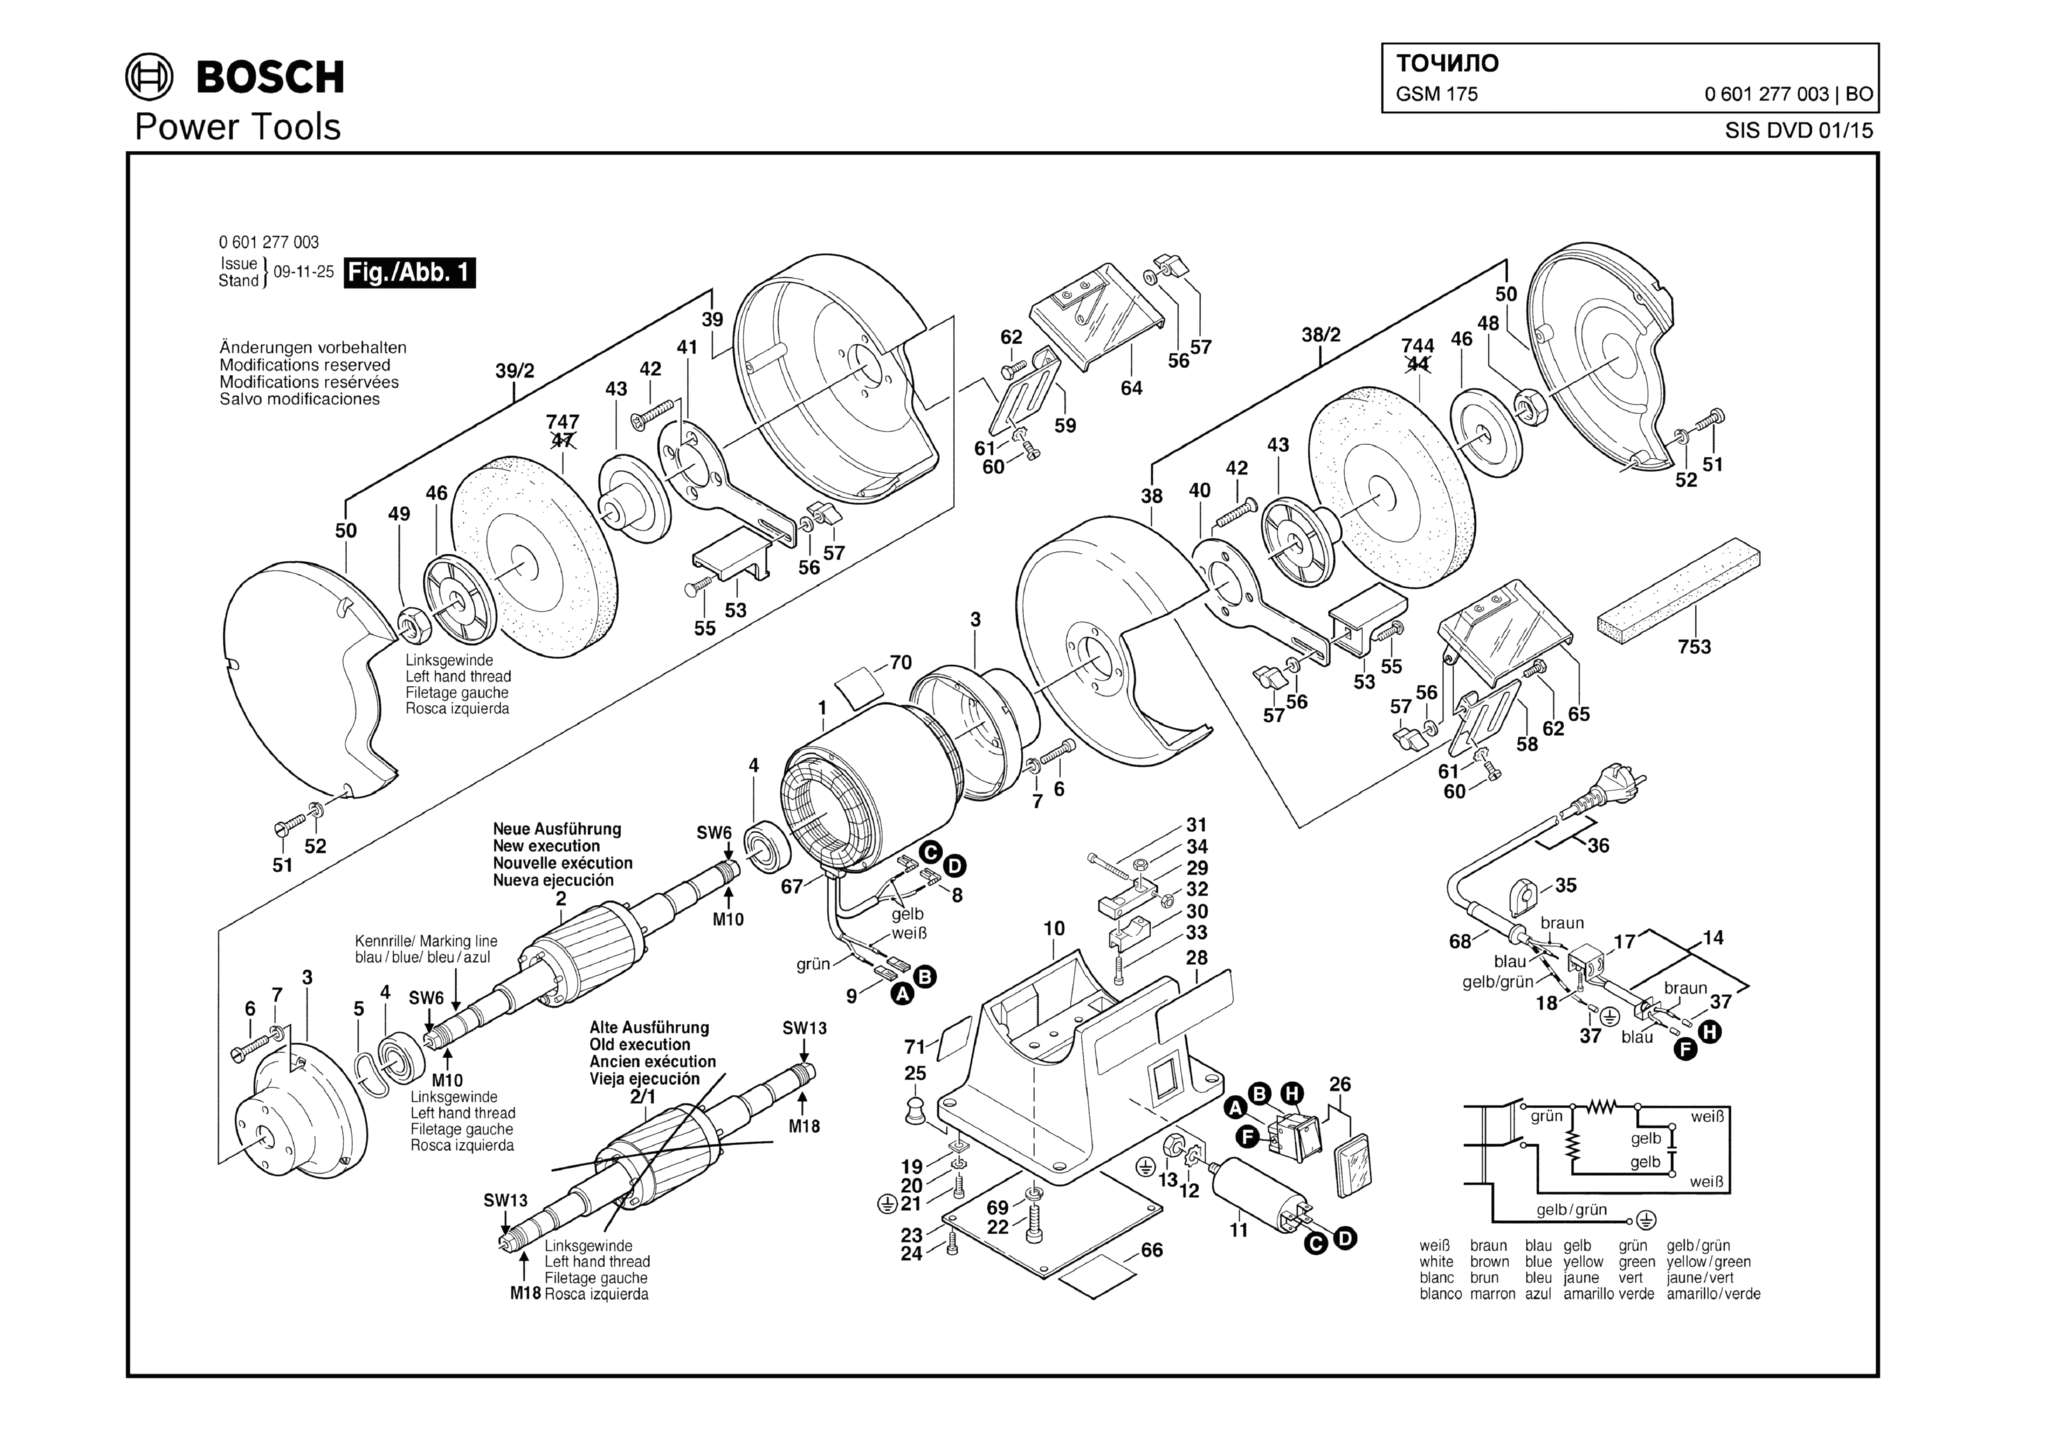 Запчасти, схема и деталировка Bosch GSM 175 (ТИП 0601277003)